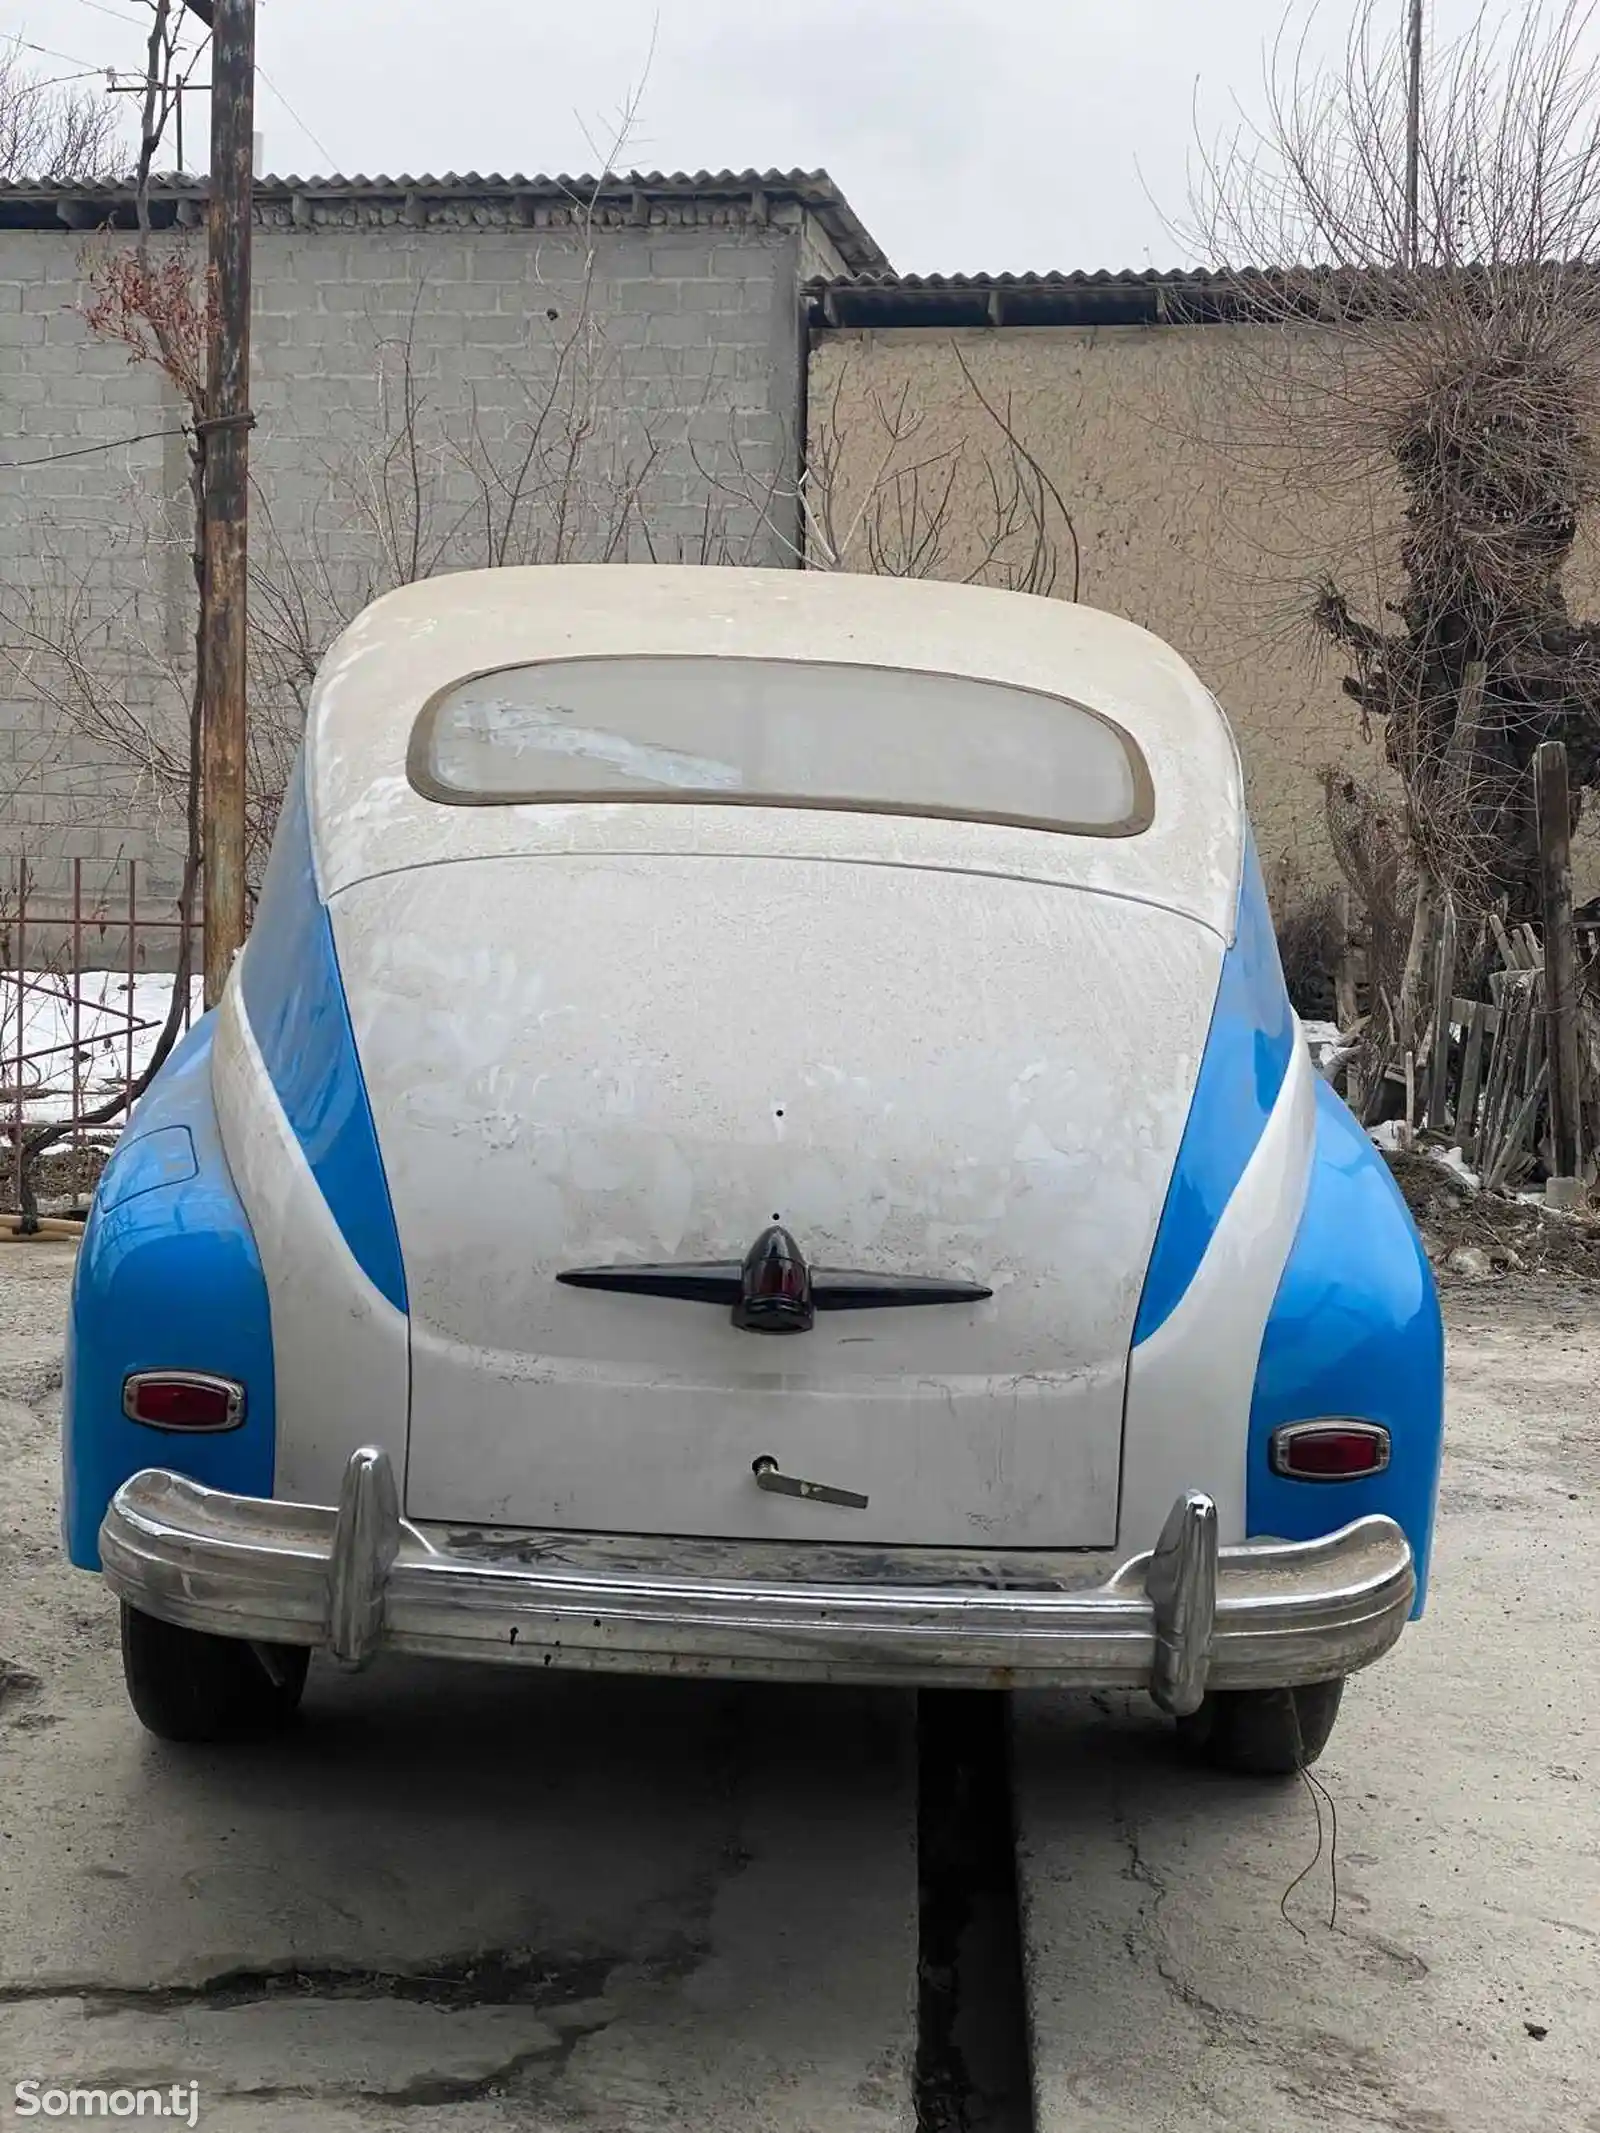 ГАЗ 20, 1954-1